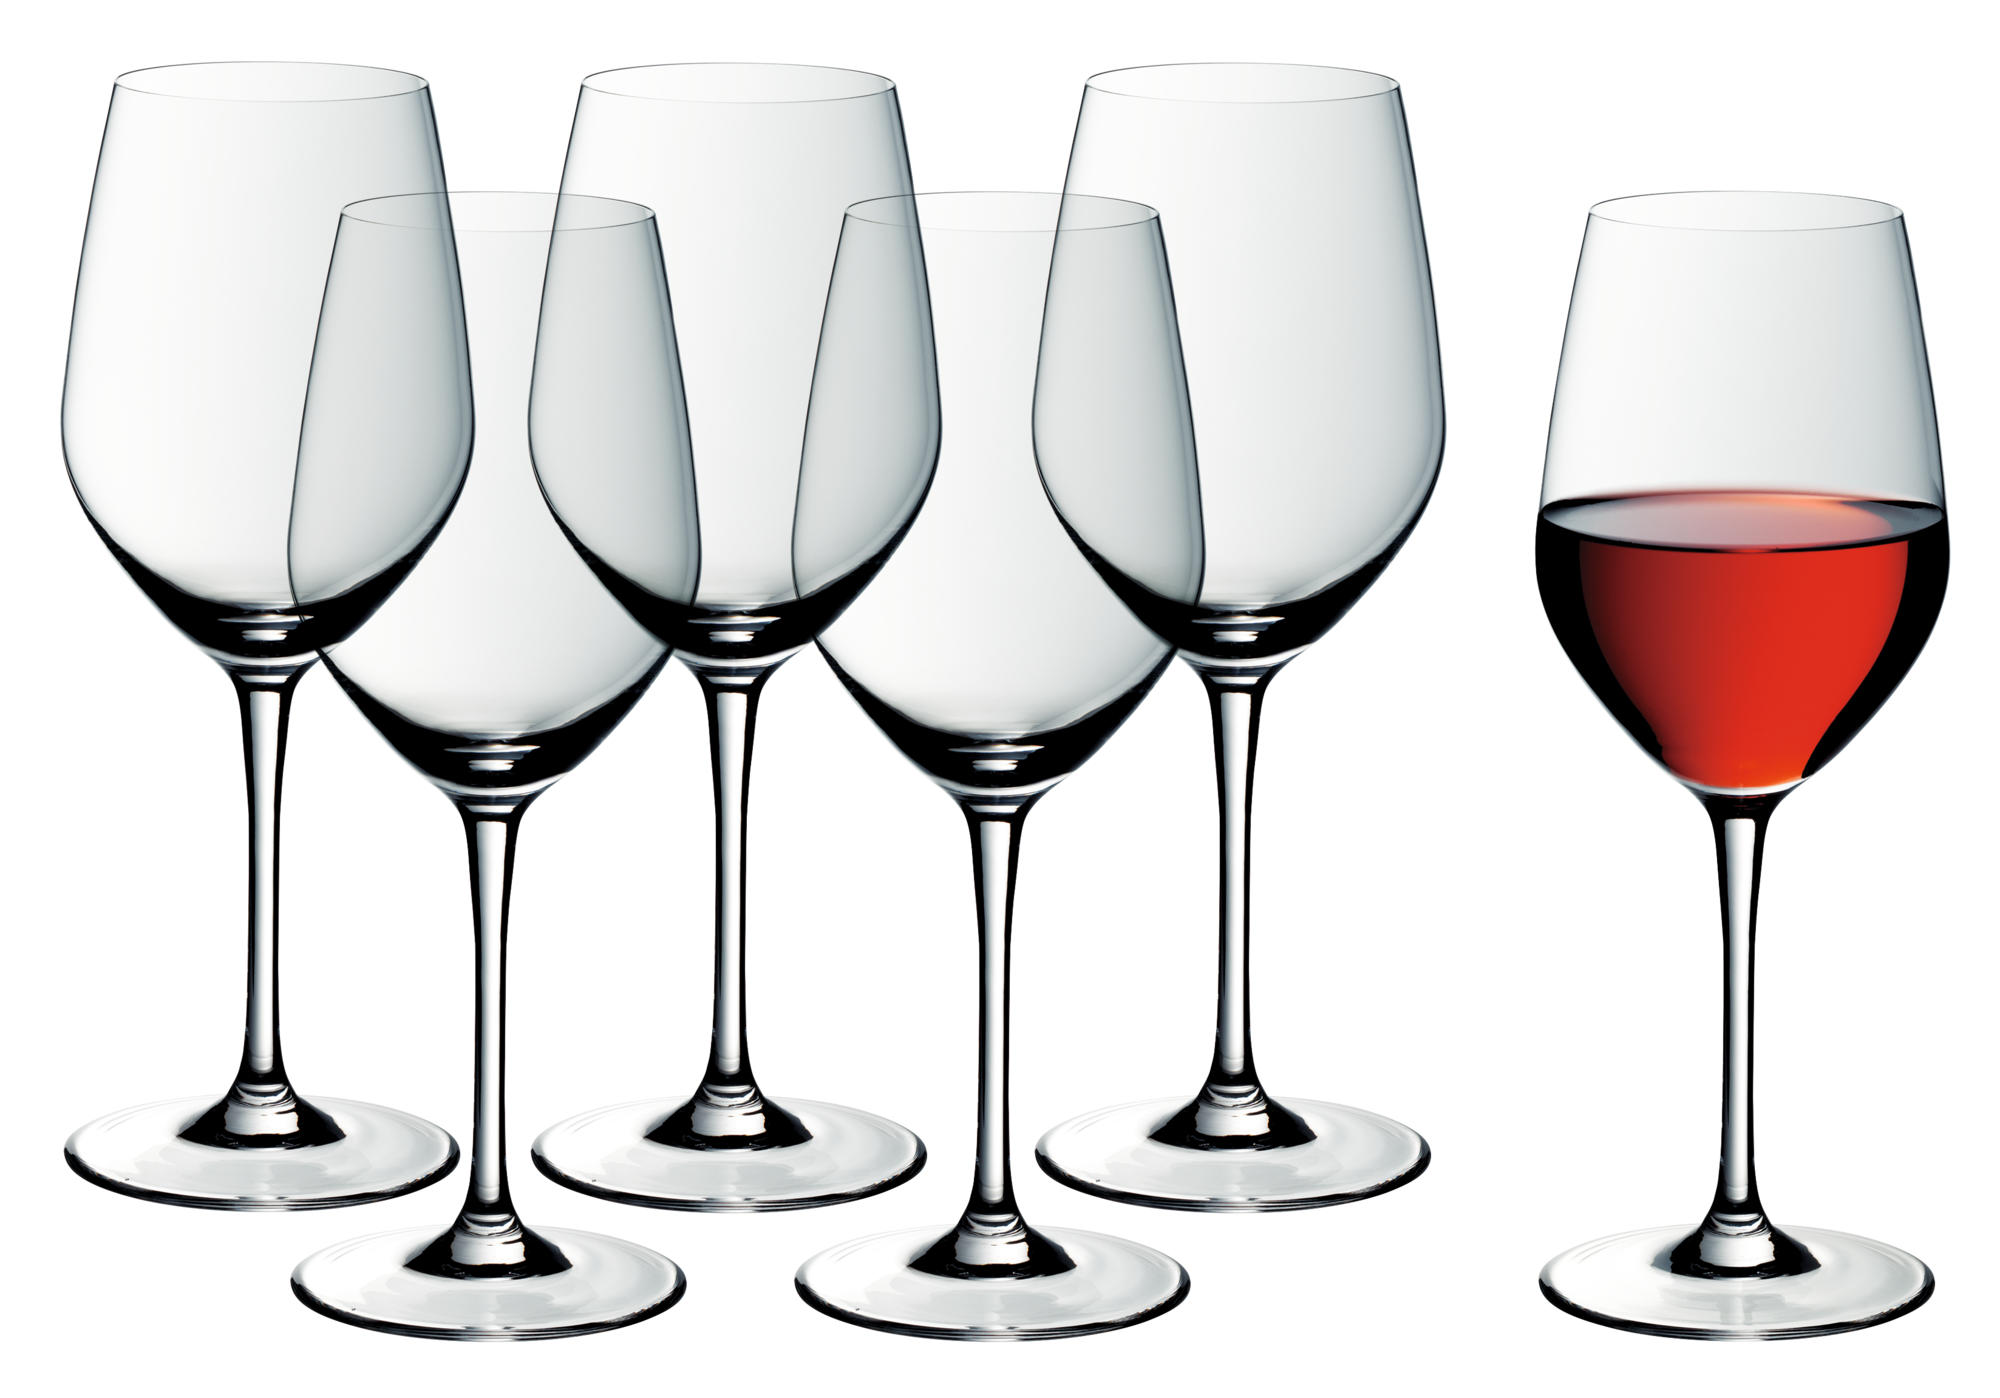 EasyPlus Red wine glasses 6pcs.